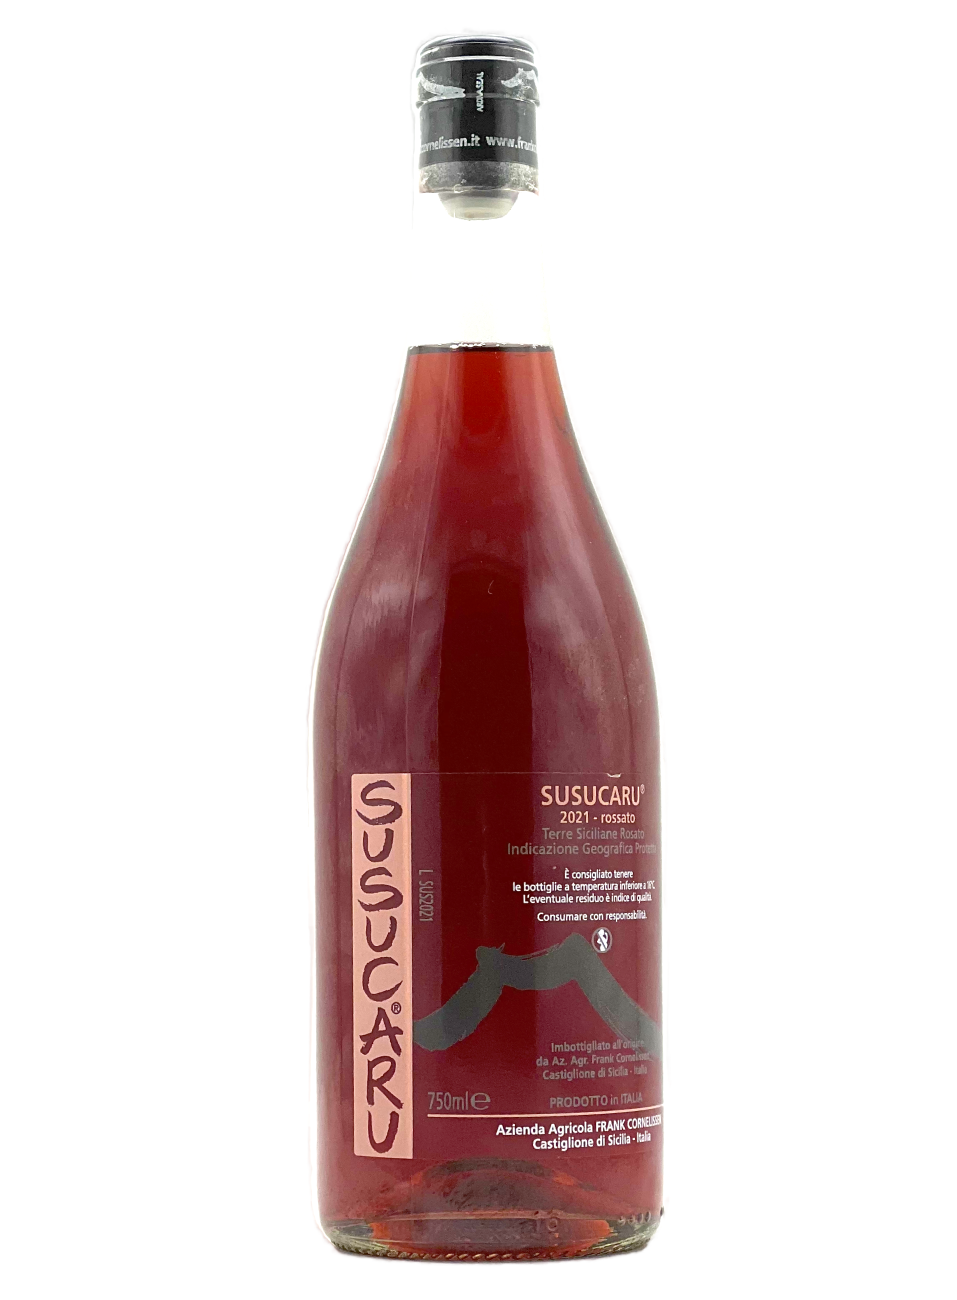 Susucaru Wine, What Is It?